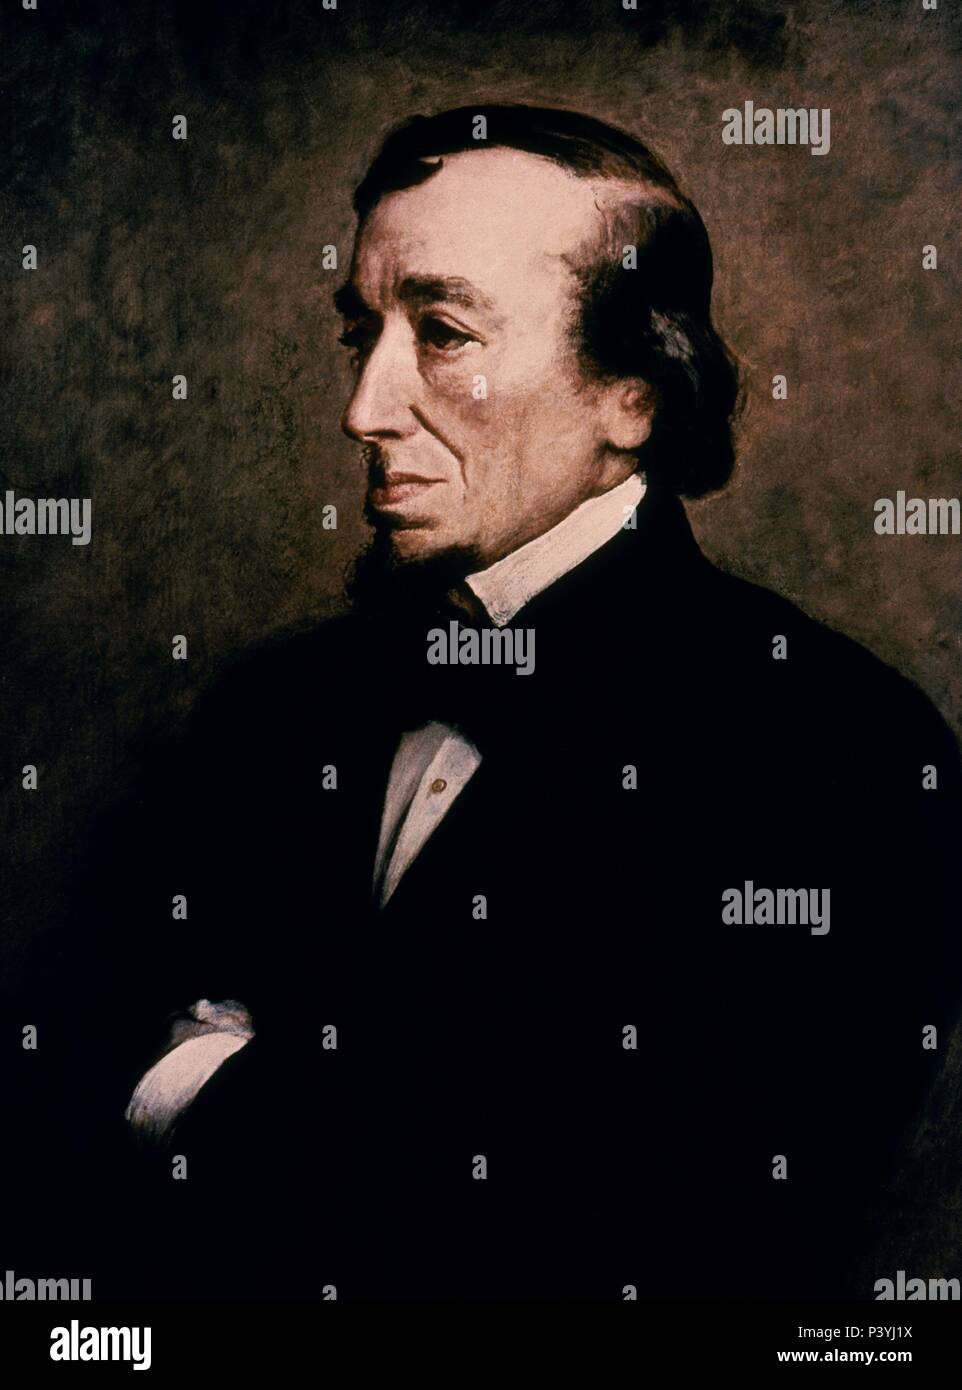 Benjamín Disraeli (Lord Beaconsfield) - 1804-1881. Autor: John Everett Millais (1829-1896). Ubicación: National Portrait Gallery, Londres. Foto de stock